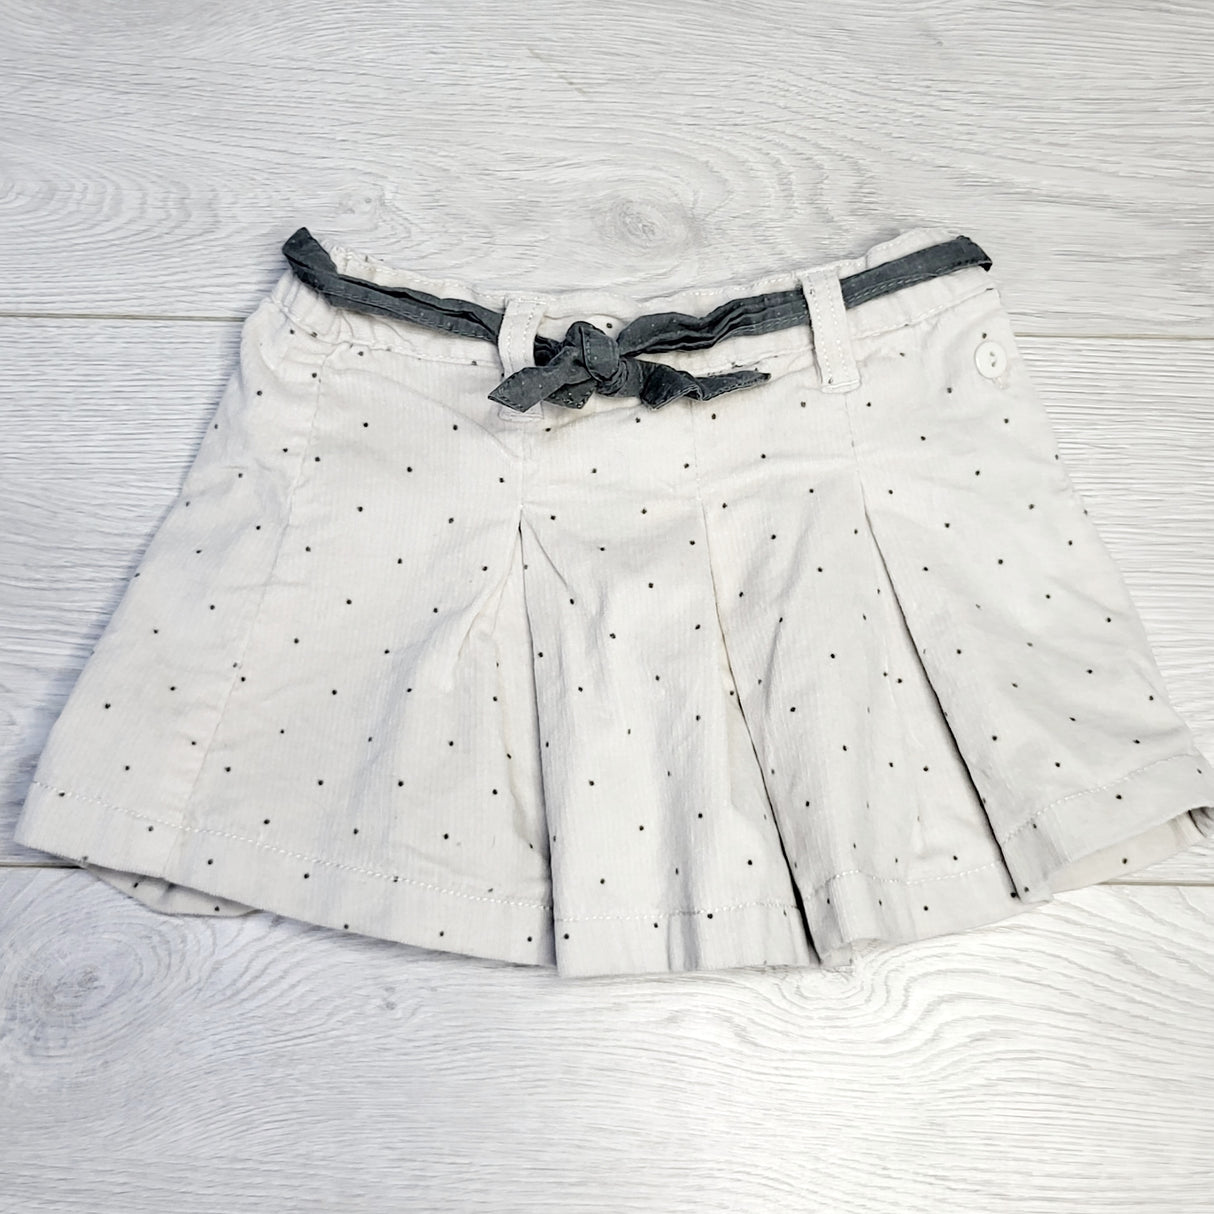 GDM1 - Osan pleated polka dot skirt, size 24 months